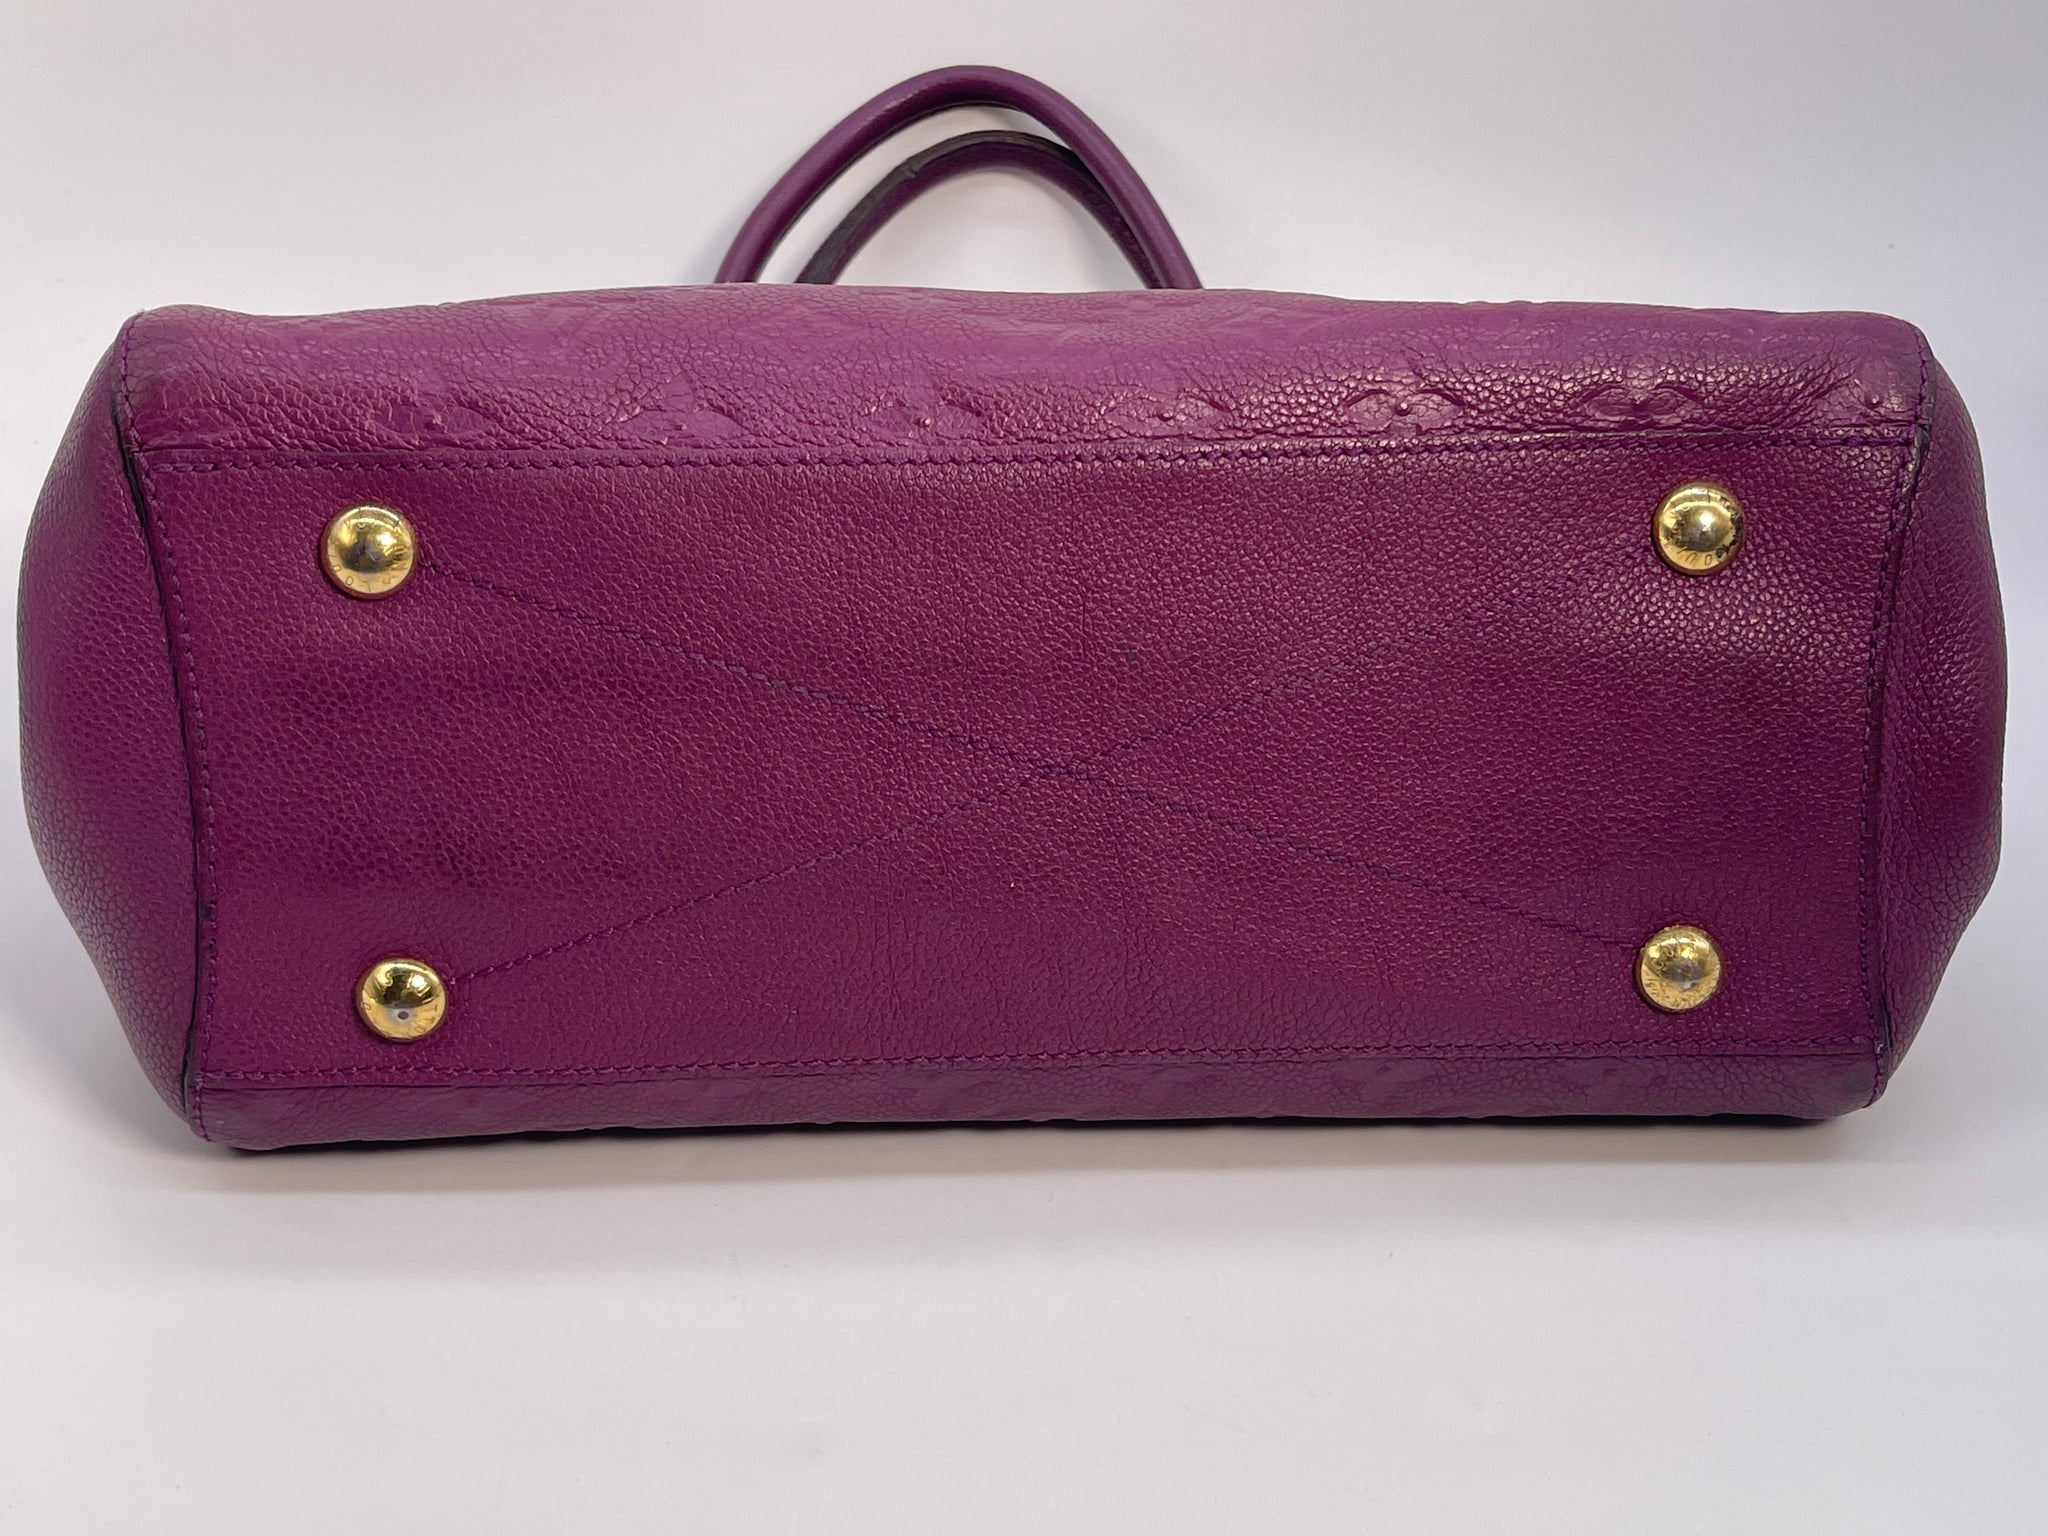 Louis Vuitton Montaigne MM handbag strap in blue/red monogram leather , GHW